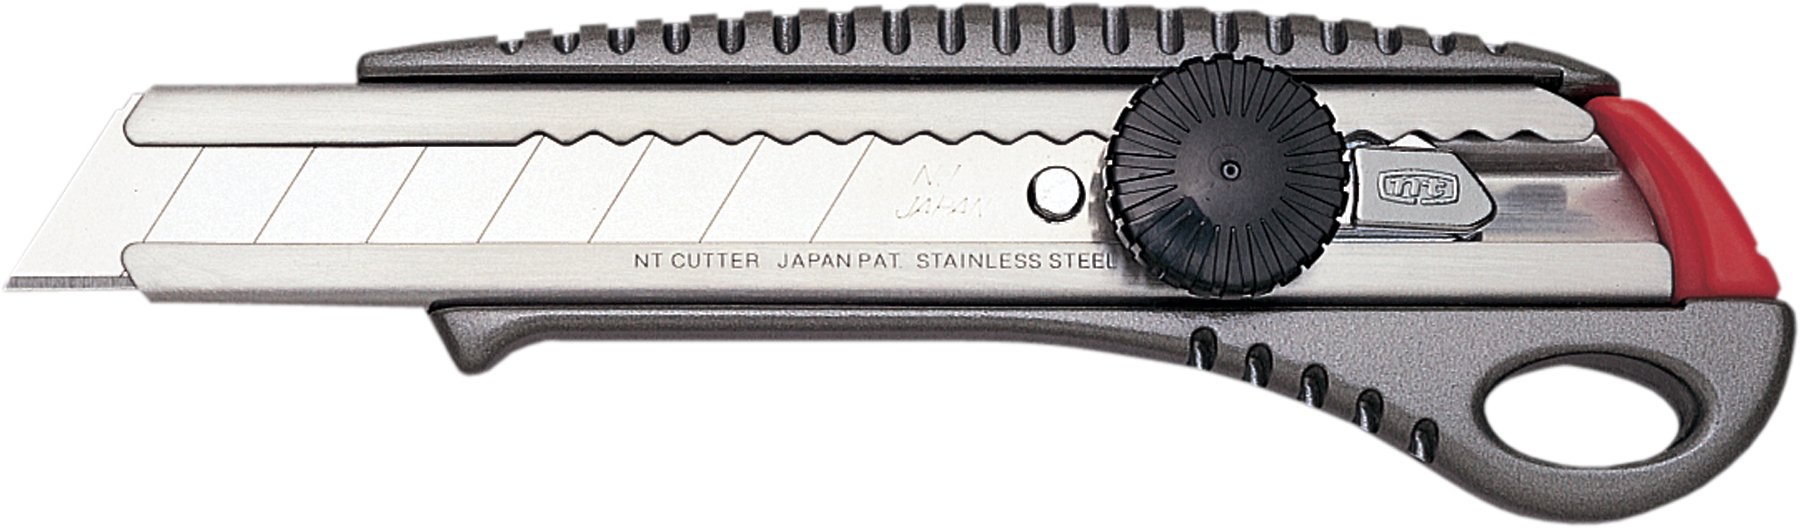 Made In Japan—NT Cutter Heavy-Duty Aluminum Die-Cast Anti-Slip Contoured Grip Screw-Lock Utility Knife (L-550GP) - $6.84